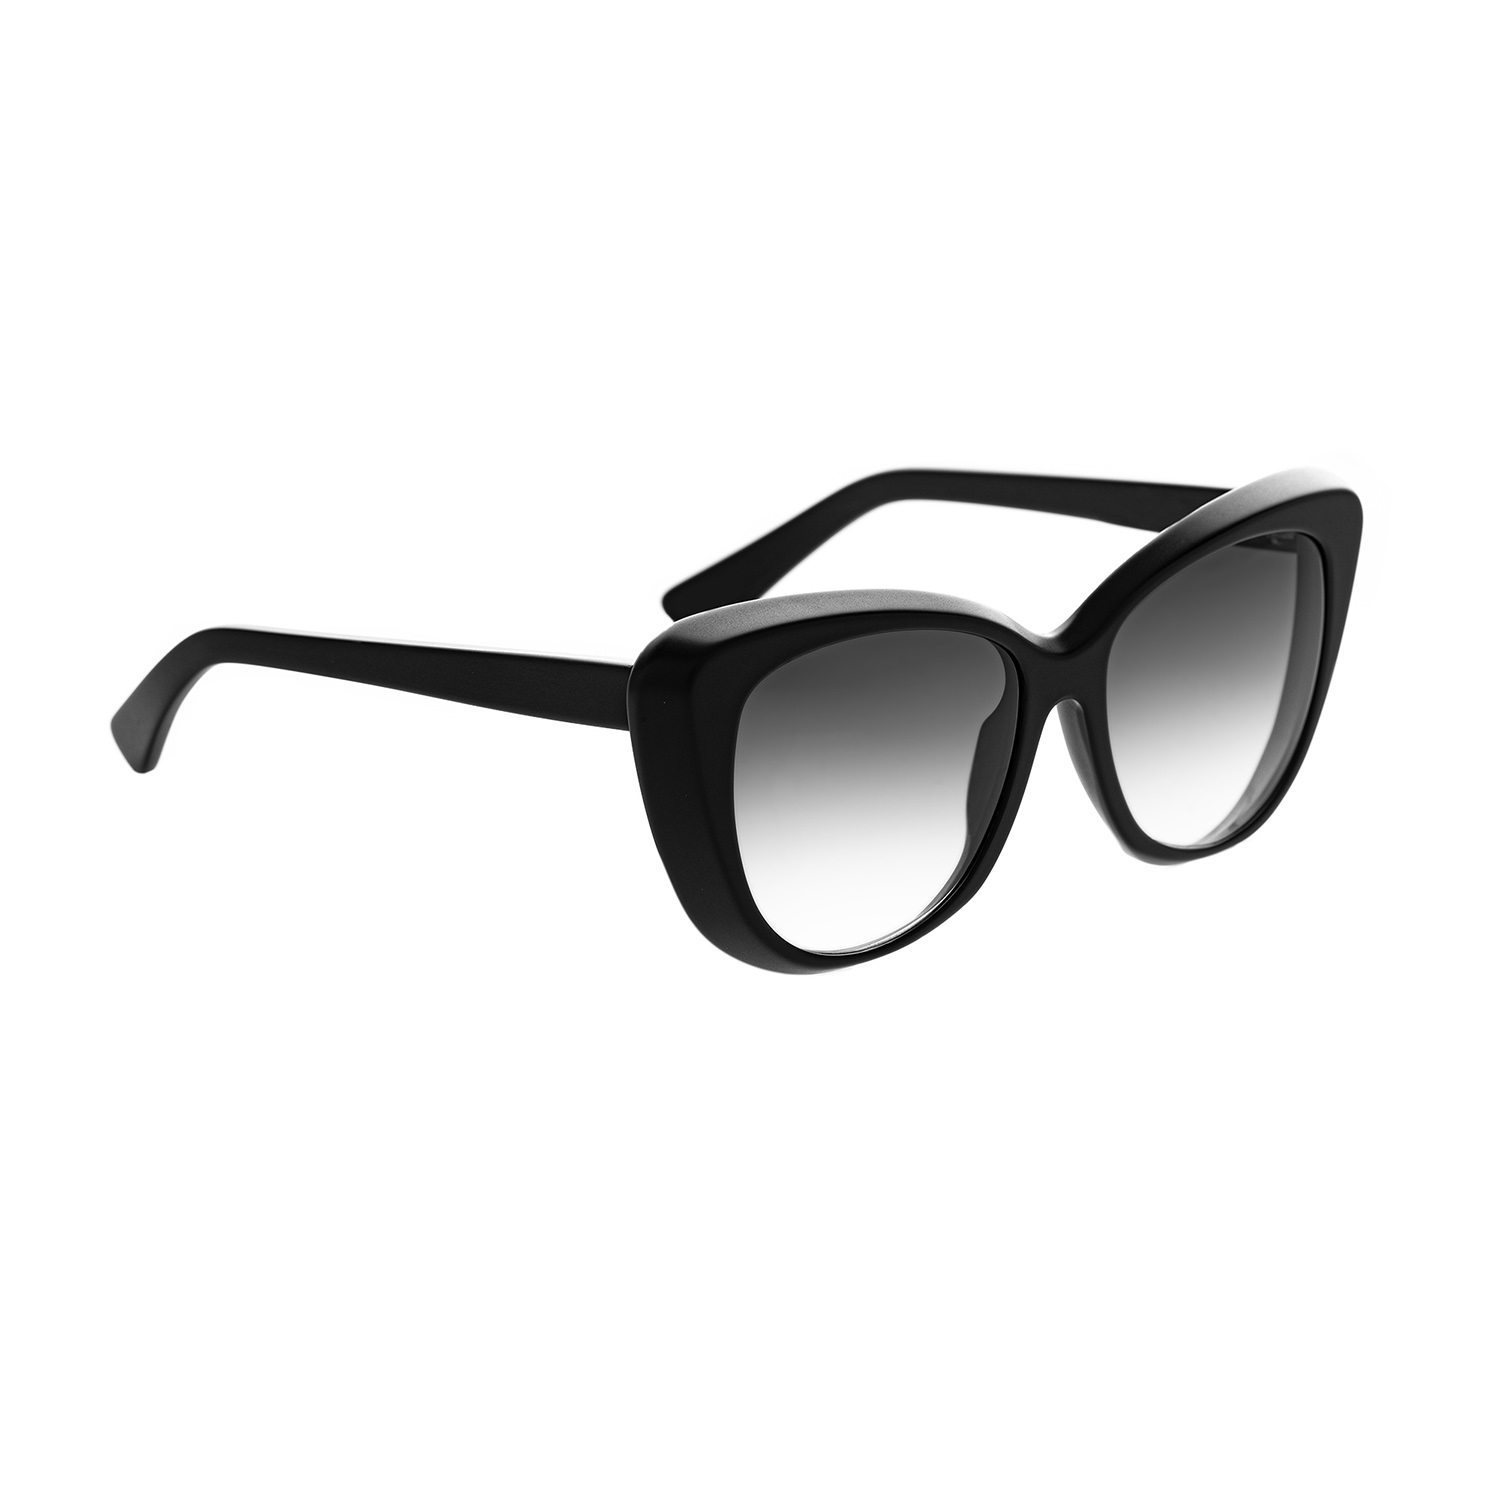 Costantino Toffoli Glasses Model T BLACK 05